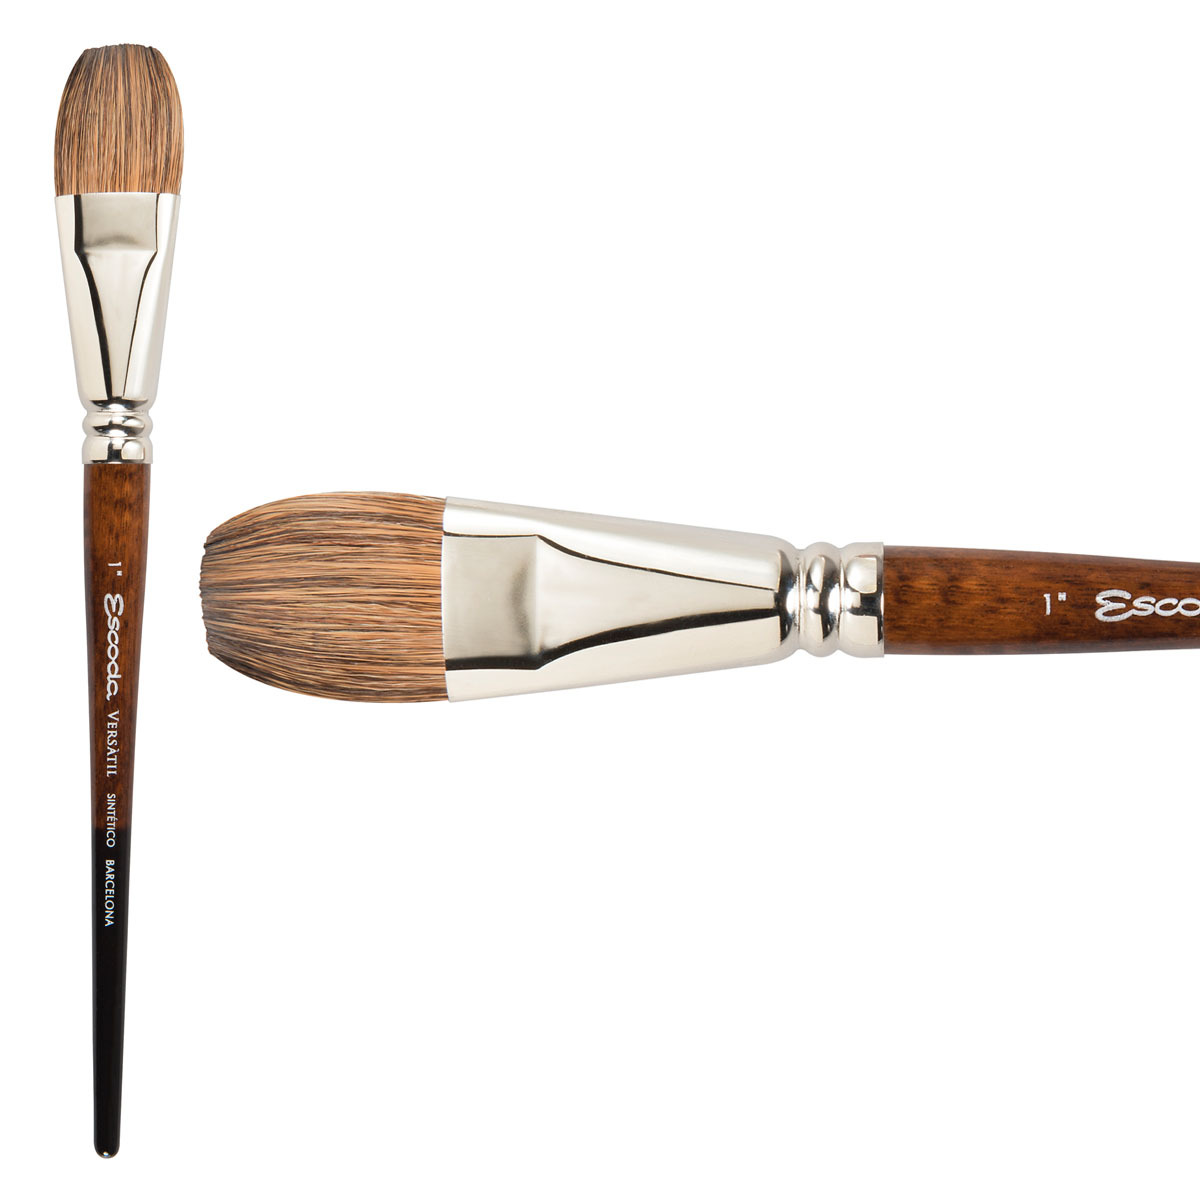 Da Vinci Colineo Synthetic Kolinsky Sable Brushes